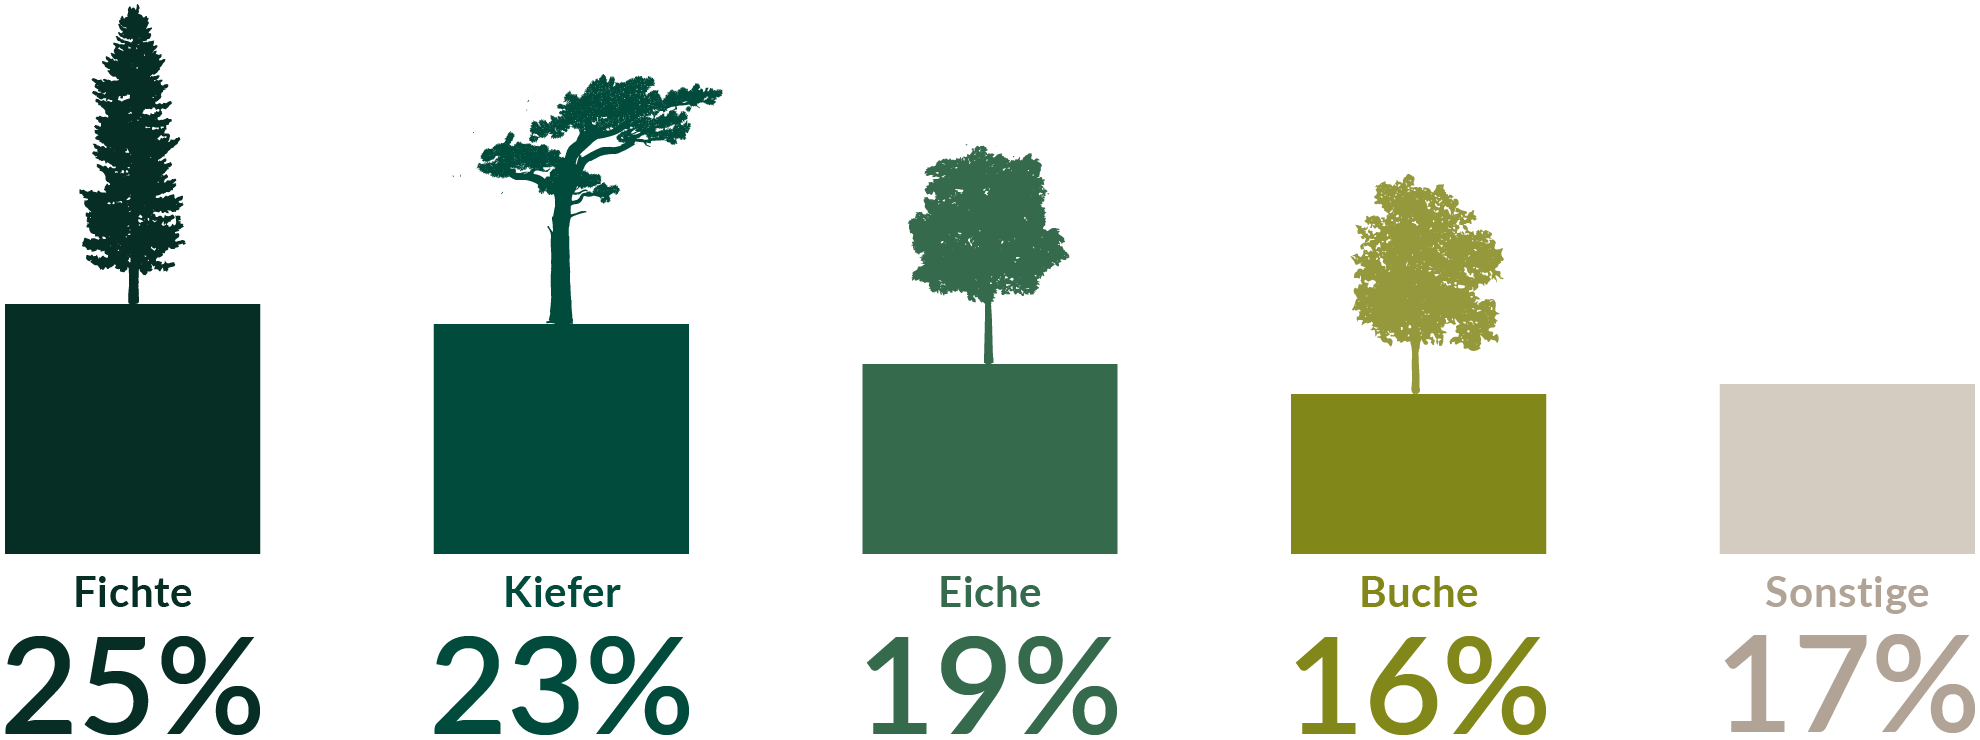 Infografik-Forstwirtschaft-Baumarten